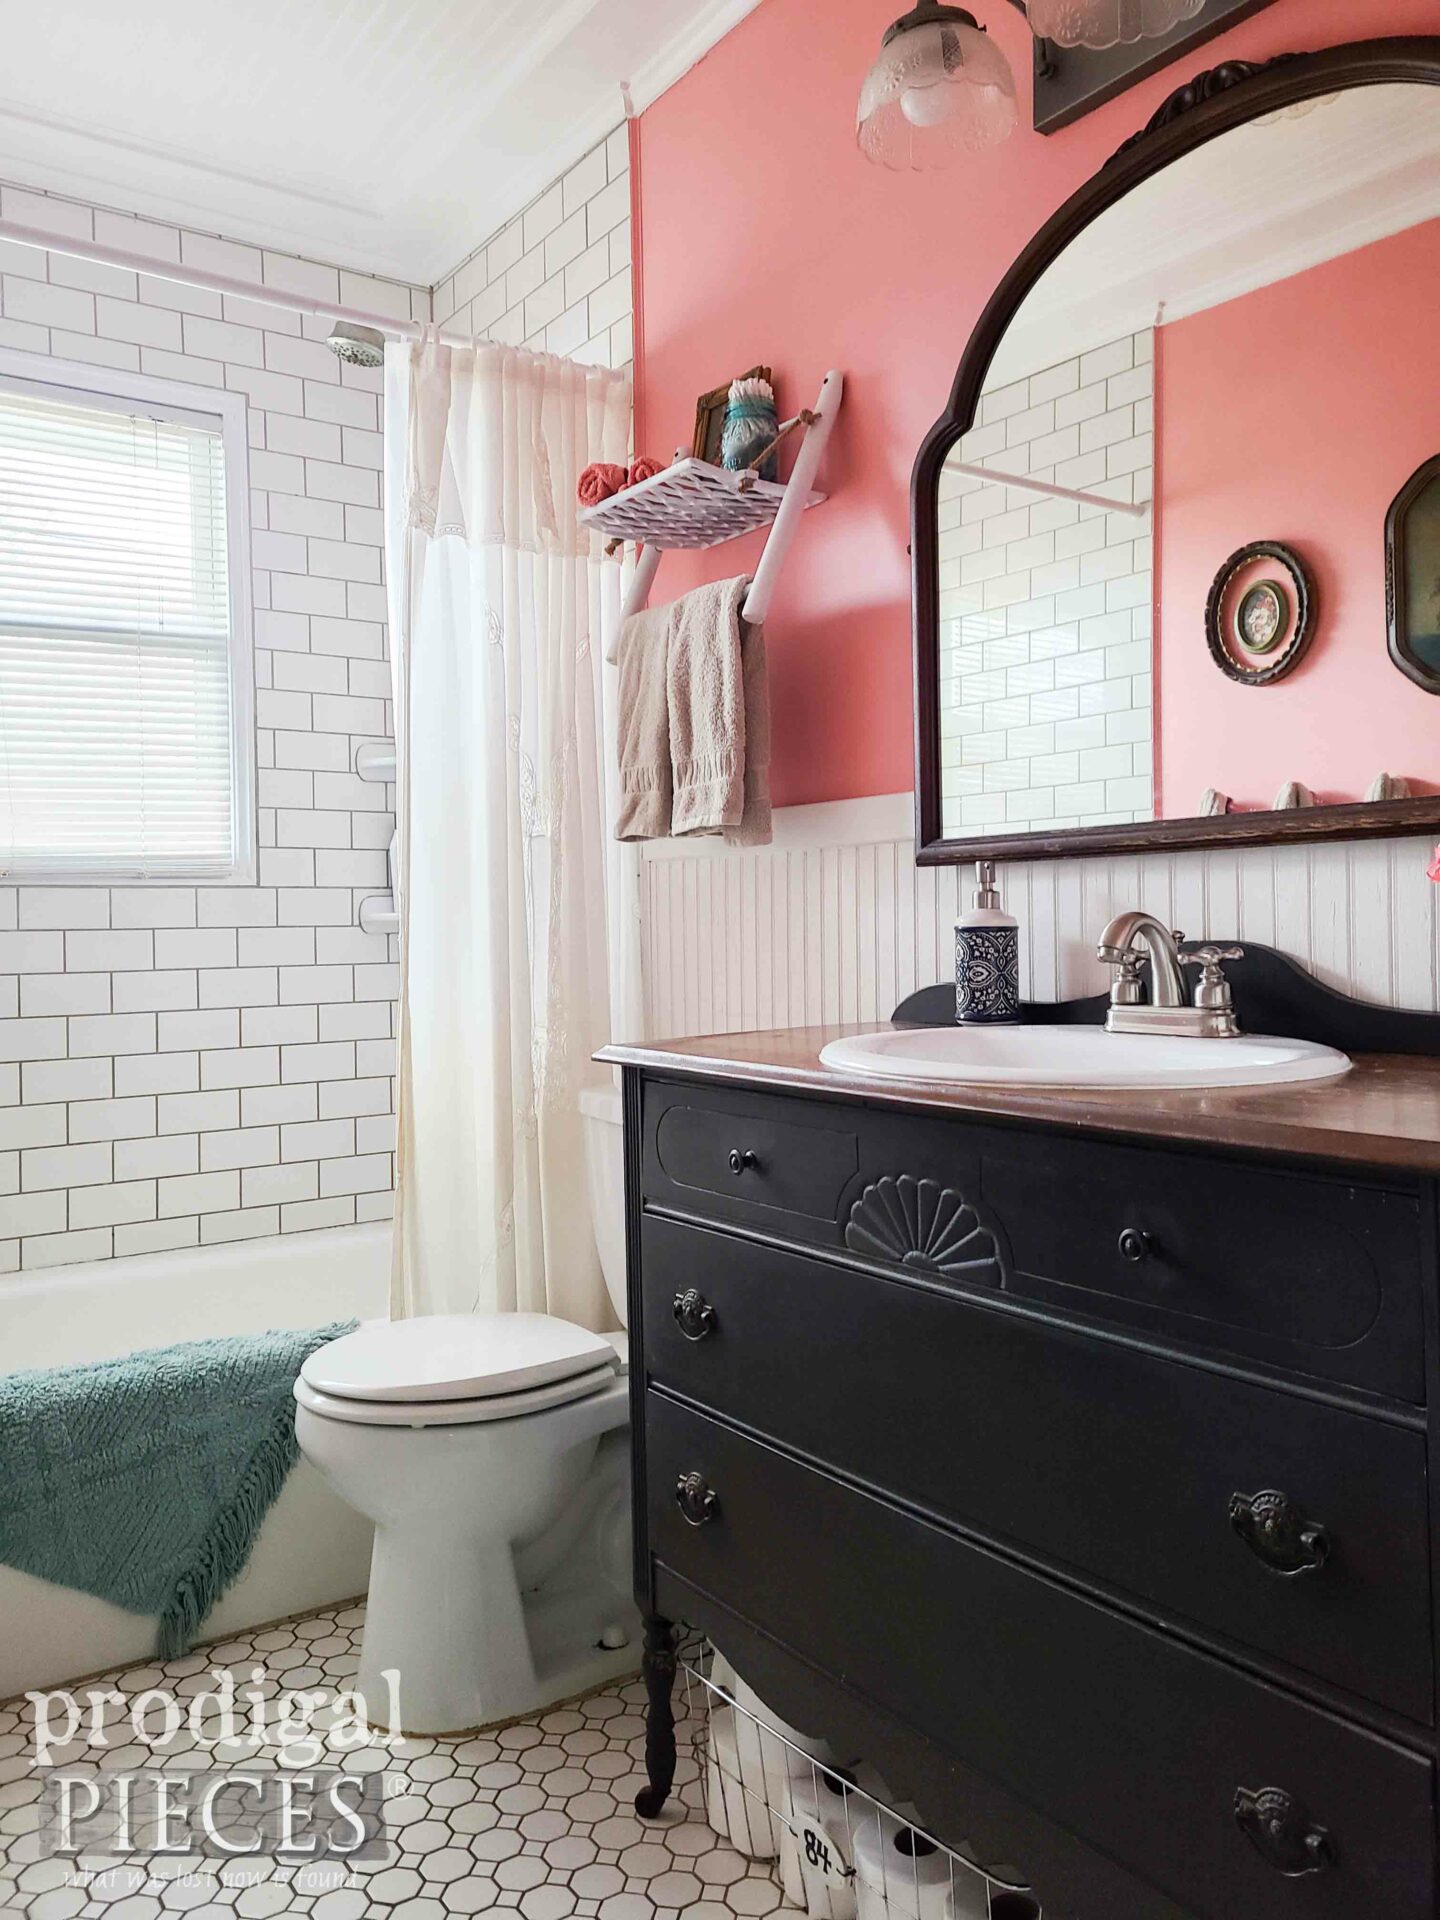 DIY Vintage Bathroom Makeover with Blush Color by Larissa of Prodigal Pieces | prodigalpieces.com #prodigalpieces